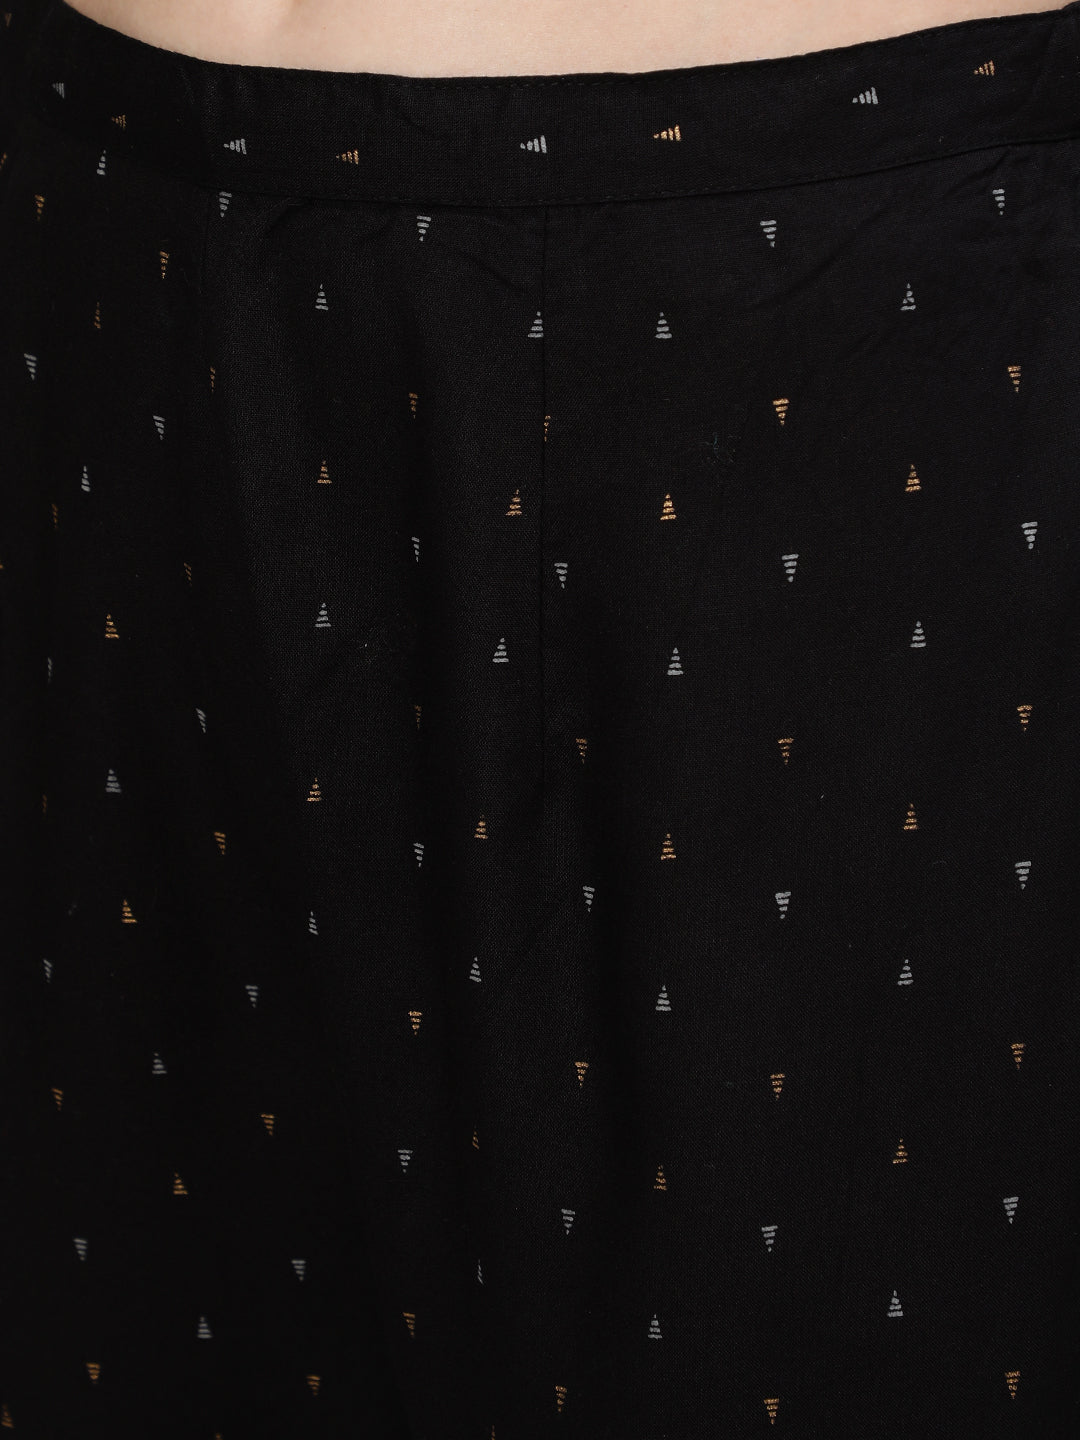 Ishin Women's Rayon Black Embroidered Kaftan Kurta Trouser Set